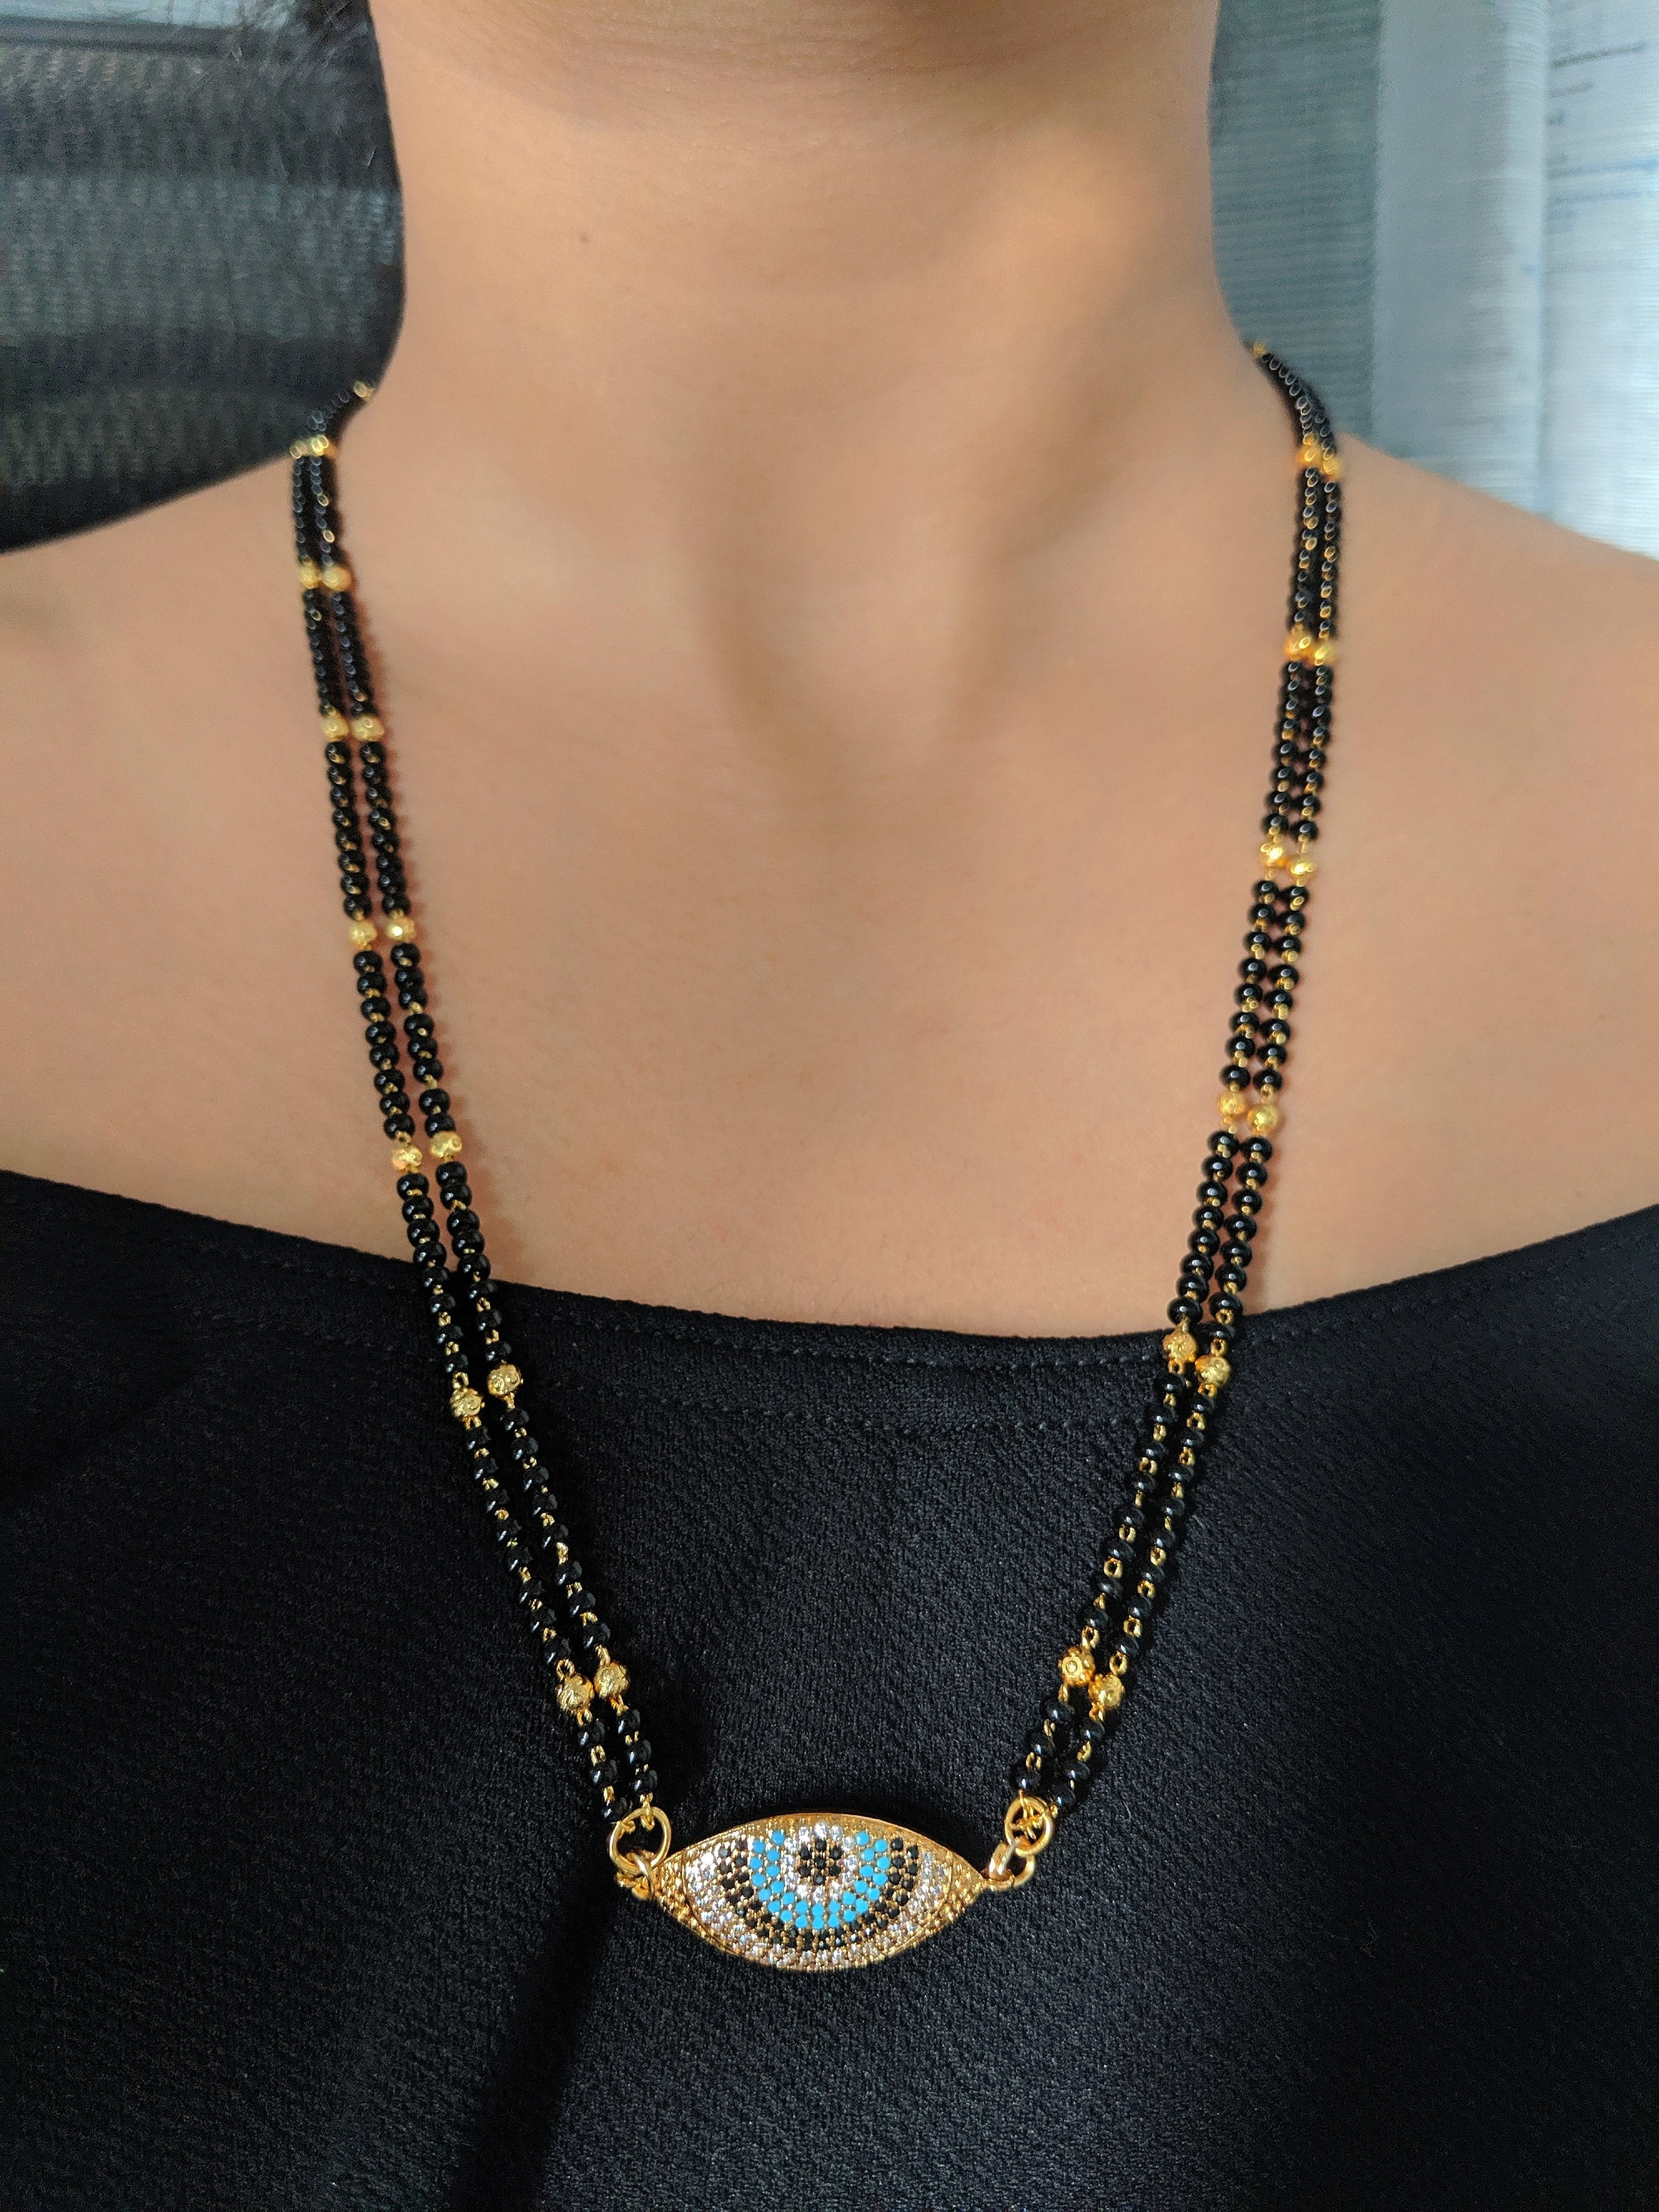 image for Modern Gold Short Mangalsutra Designs American Diamond Evil Eye Pendant Gold And Black Beads Chain